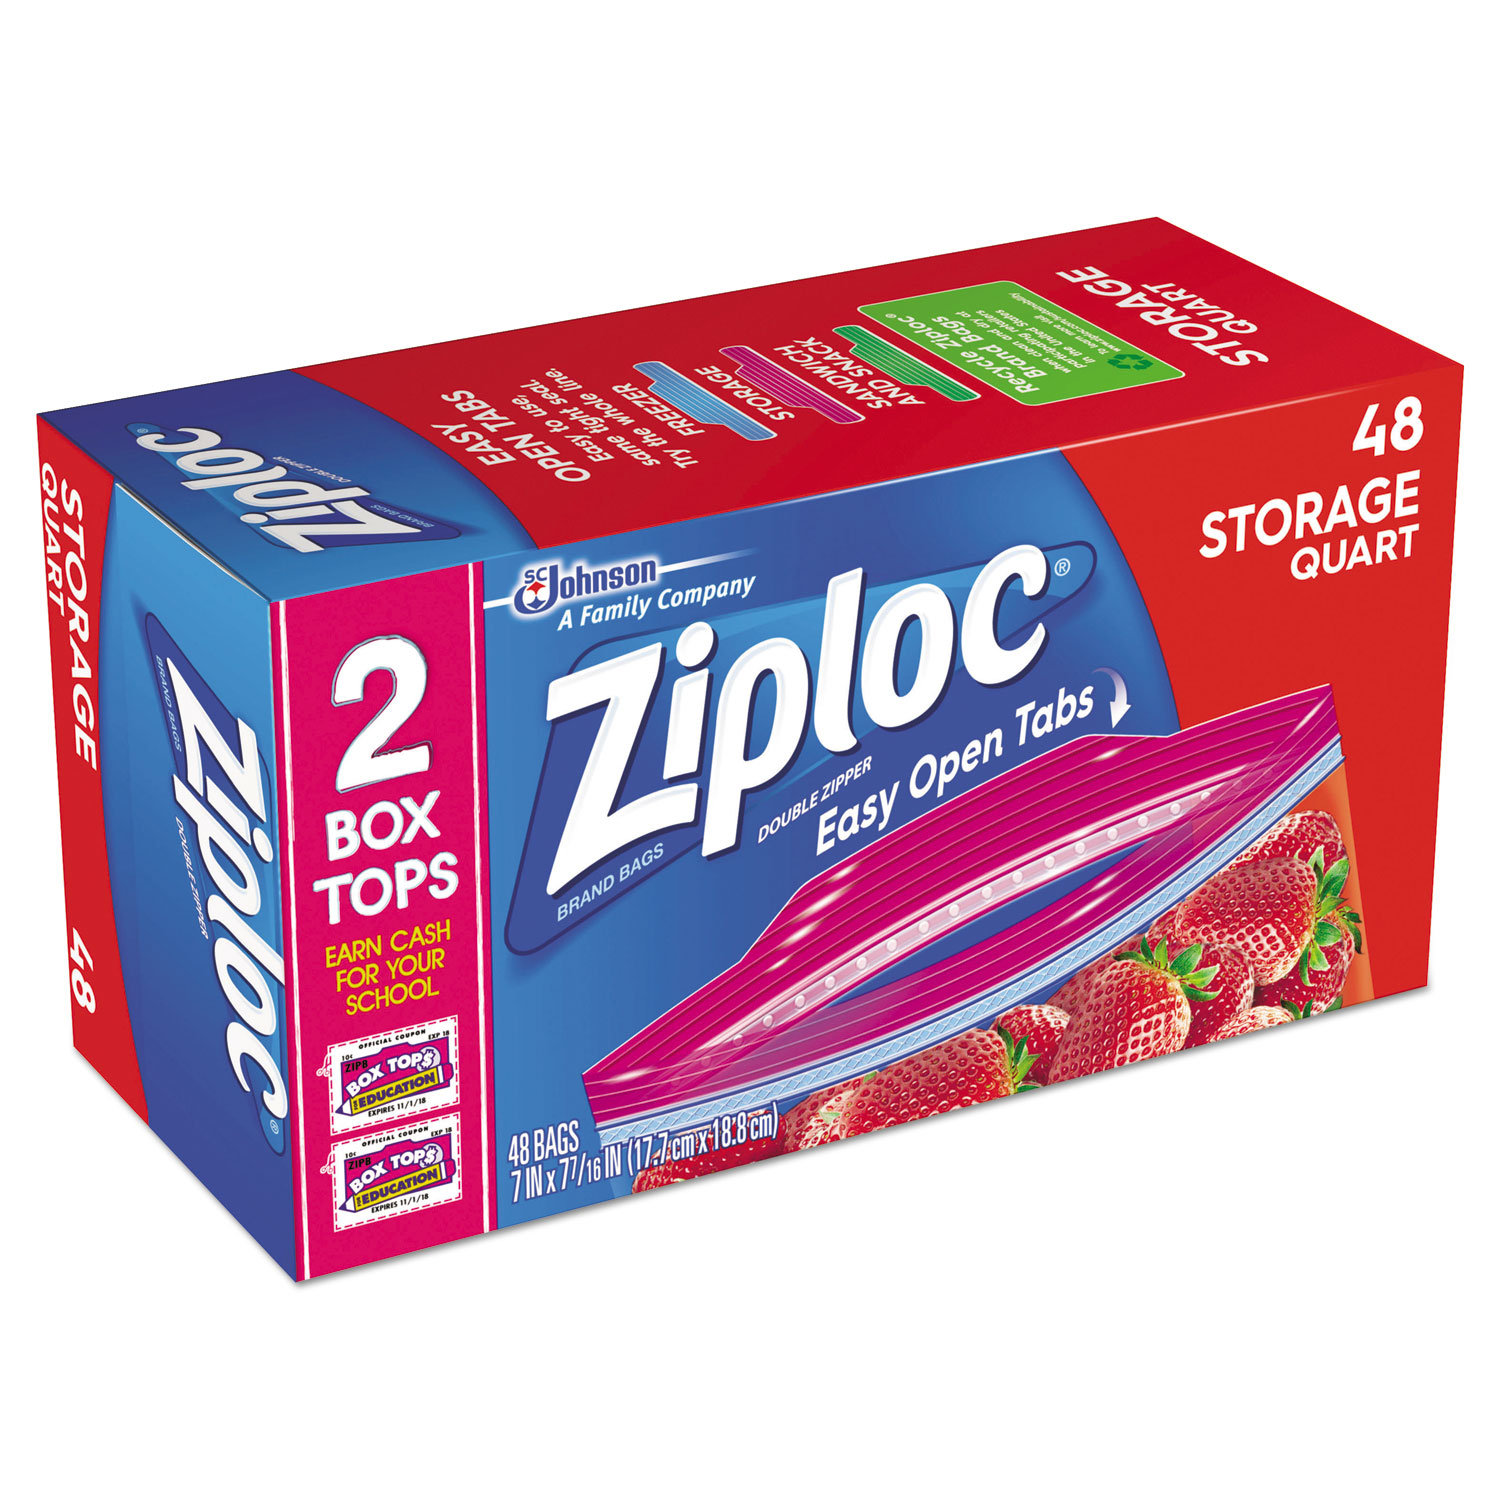 Ziploc® Brand Storage Quart Bags, Plastic Storage Bags for Food, 48 Count - image 3 of 5